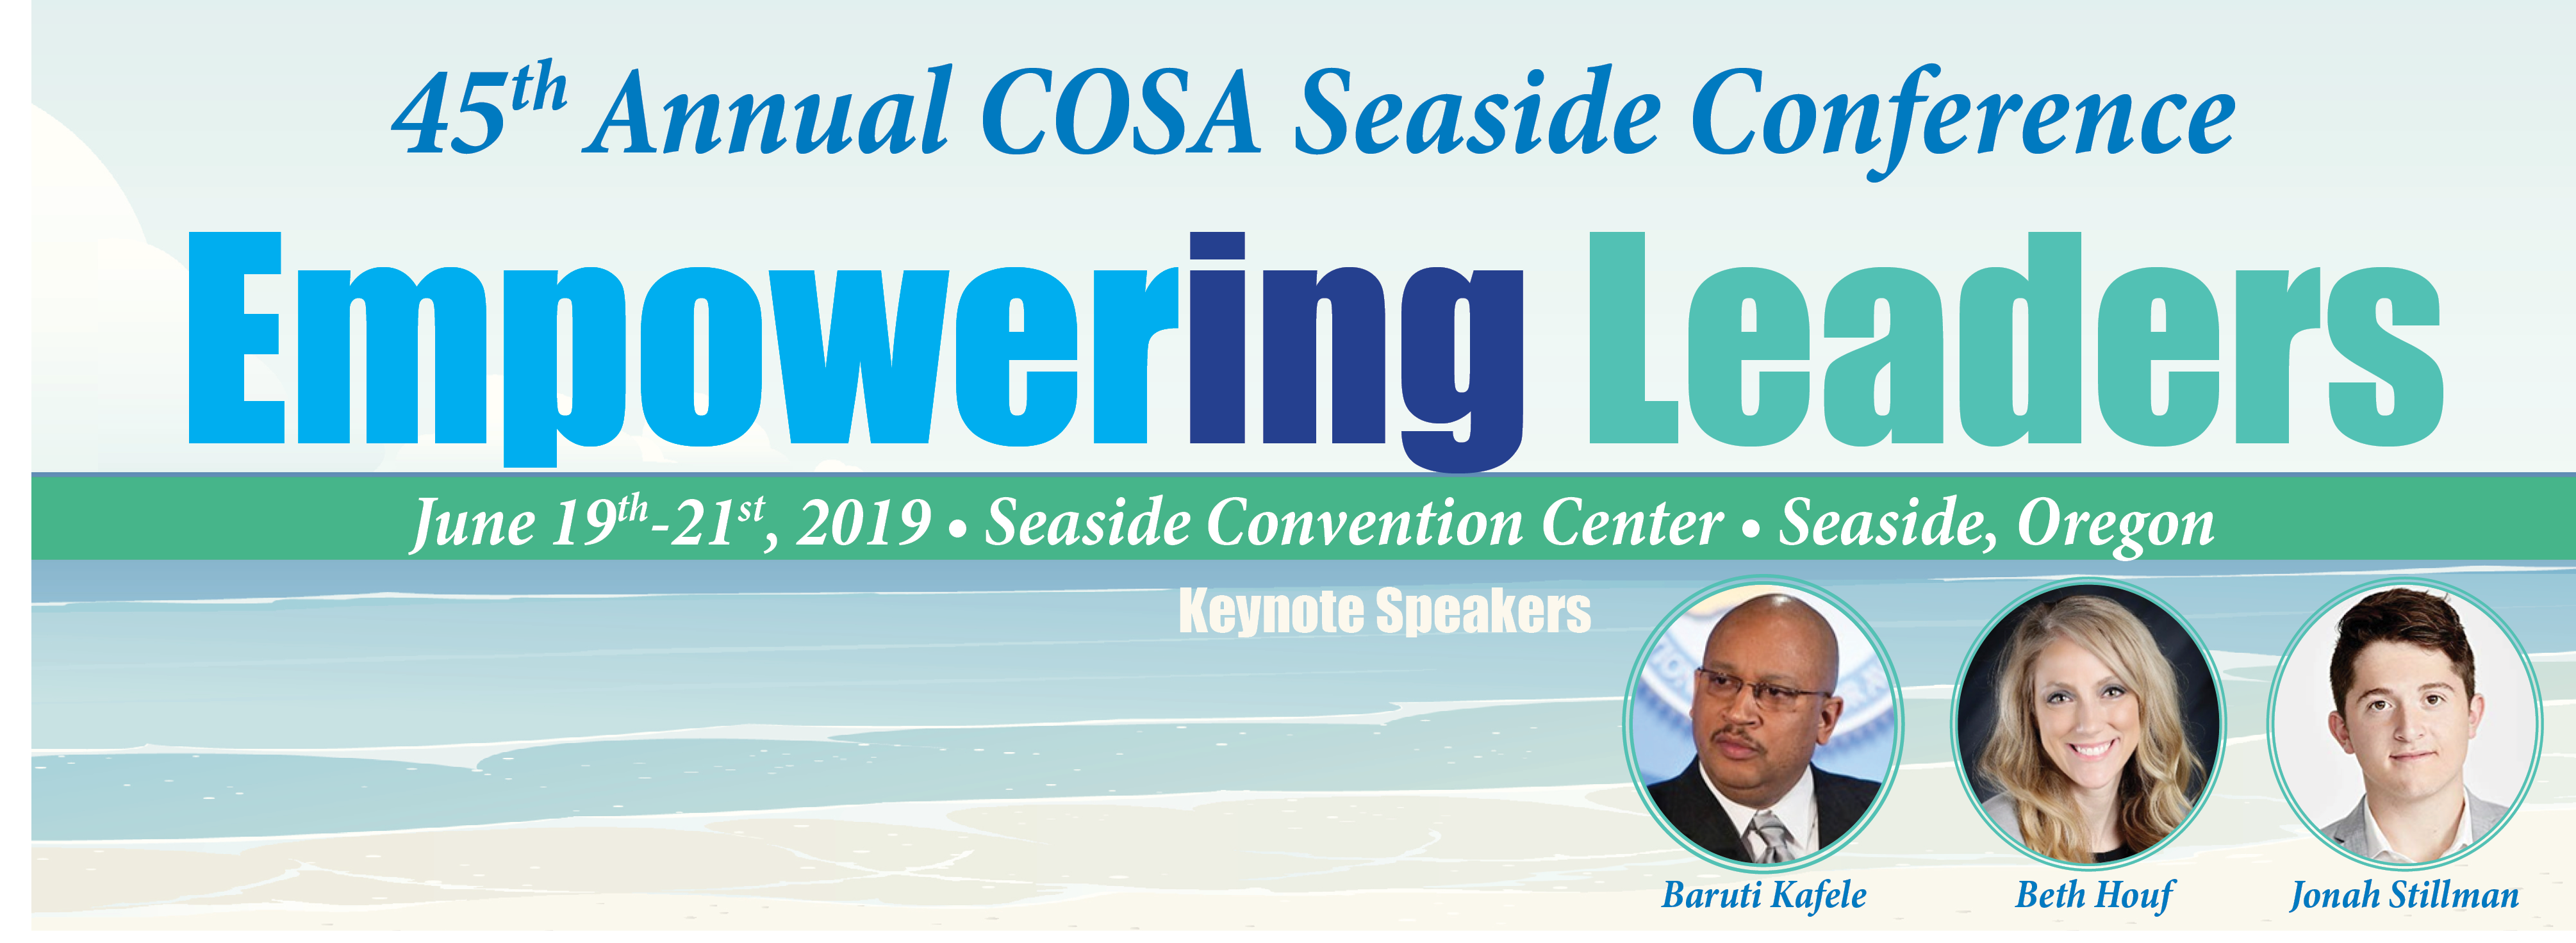 45th Annual COSA Seaside Conference Coalition of Oregon School